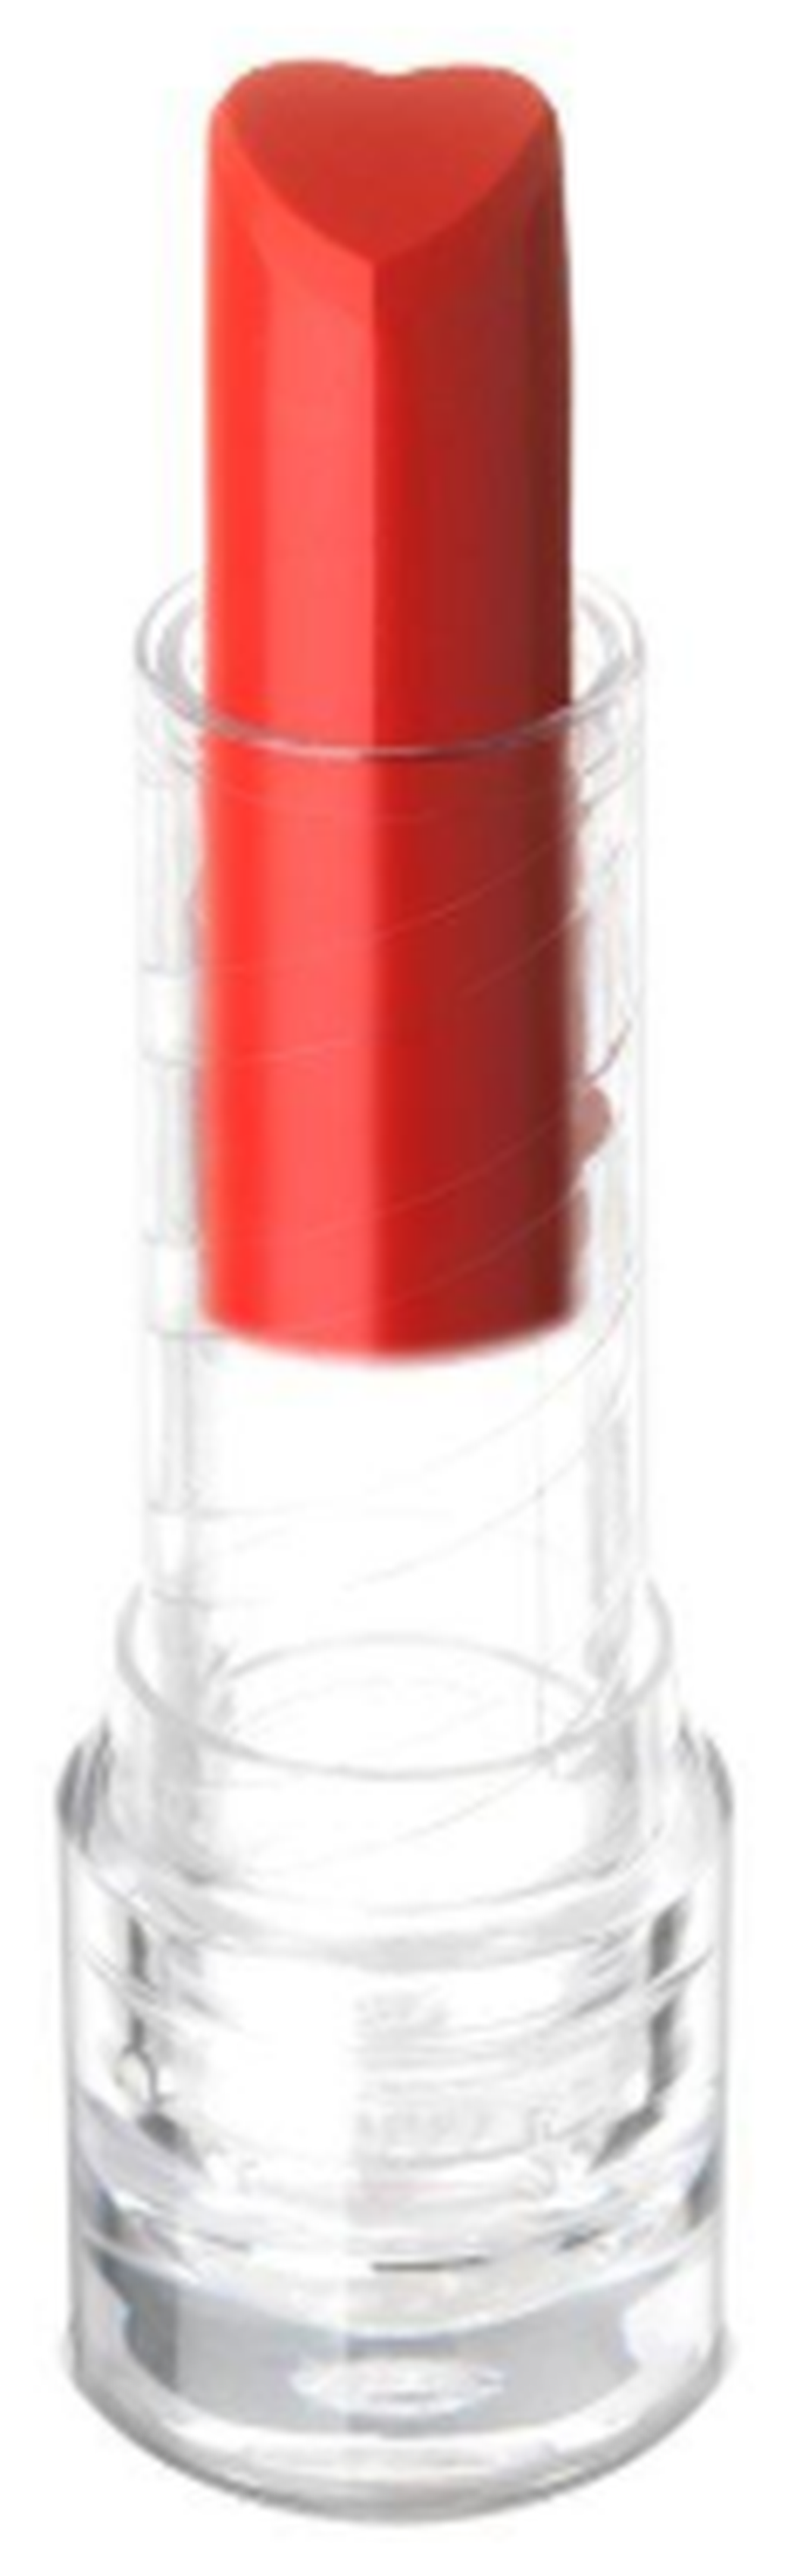 Holika Holika Кремовая помада Heartful Lipstick Melting Cream, тон CR02, персиковый, 3,5 г фото